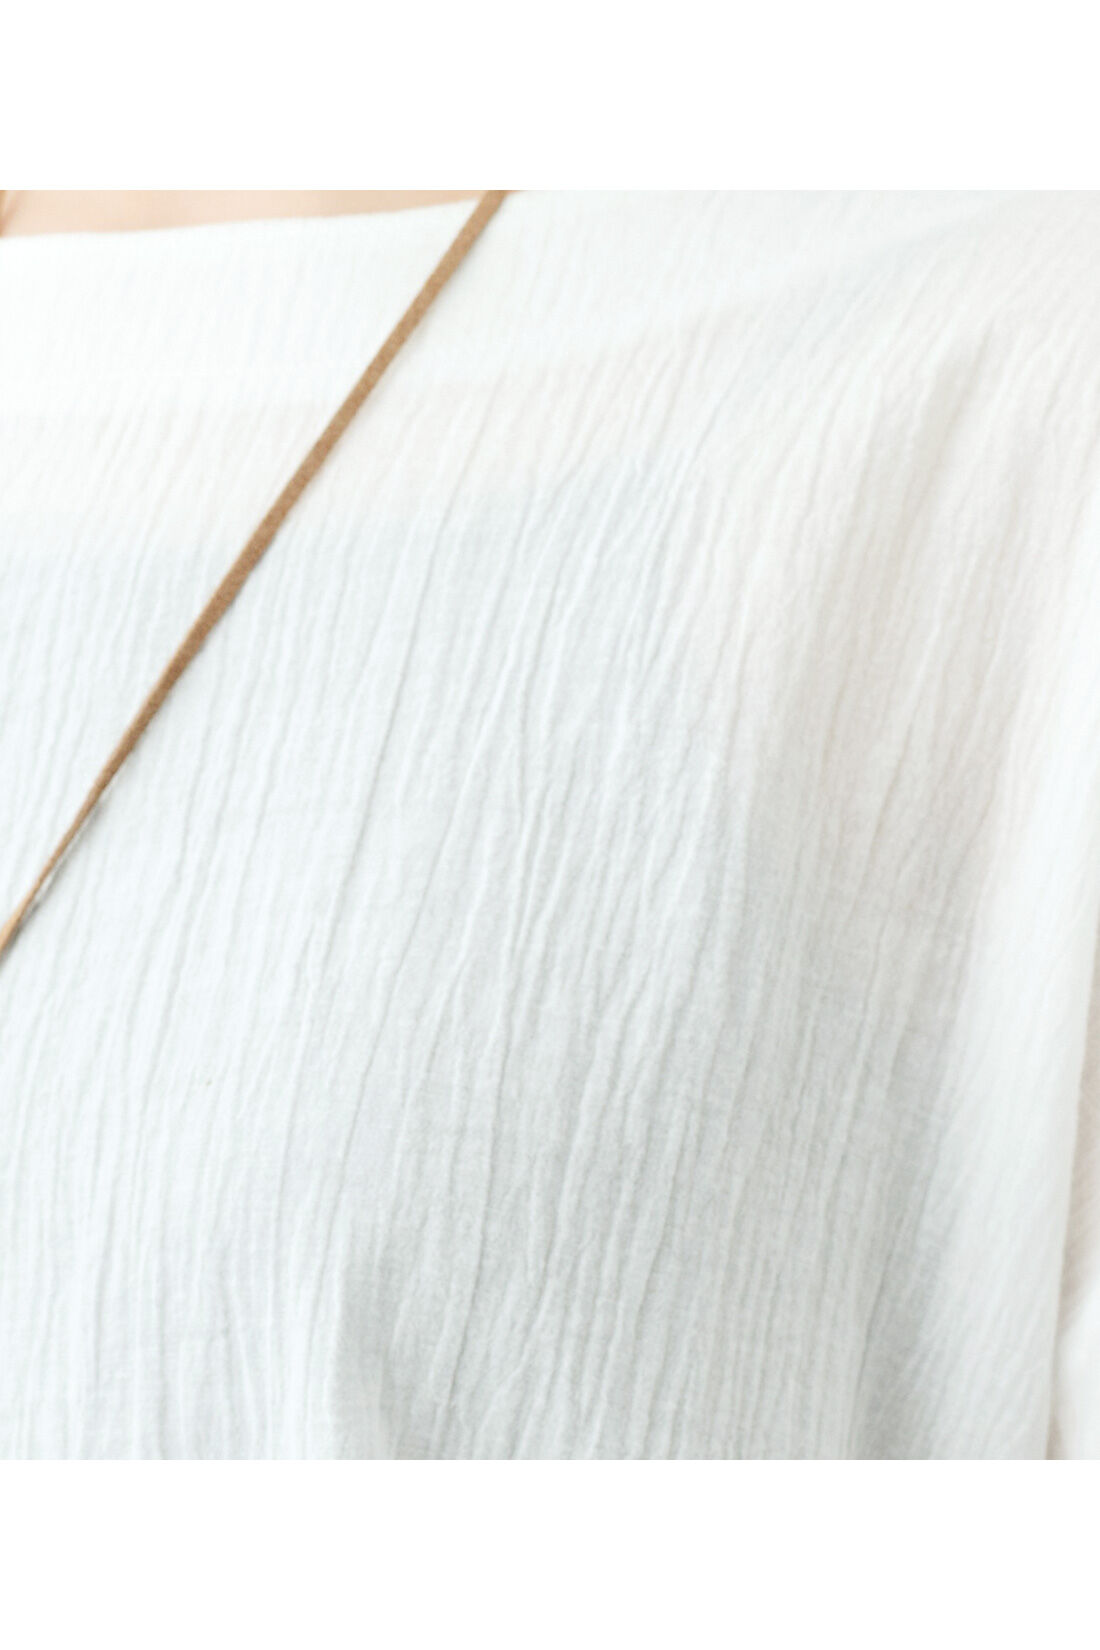 MEDE19F|MEDE19F　コットン楊柳ガーゼが心地よい プルオーバーの会|シボのあるナチュラルな風合いと、上品な透け感が涼やかなコットンガーゼ。